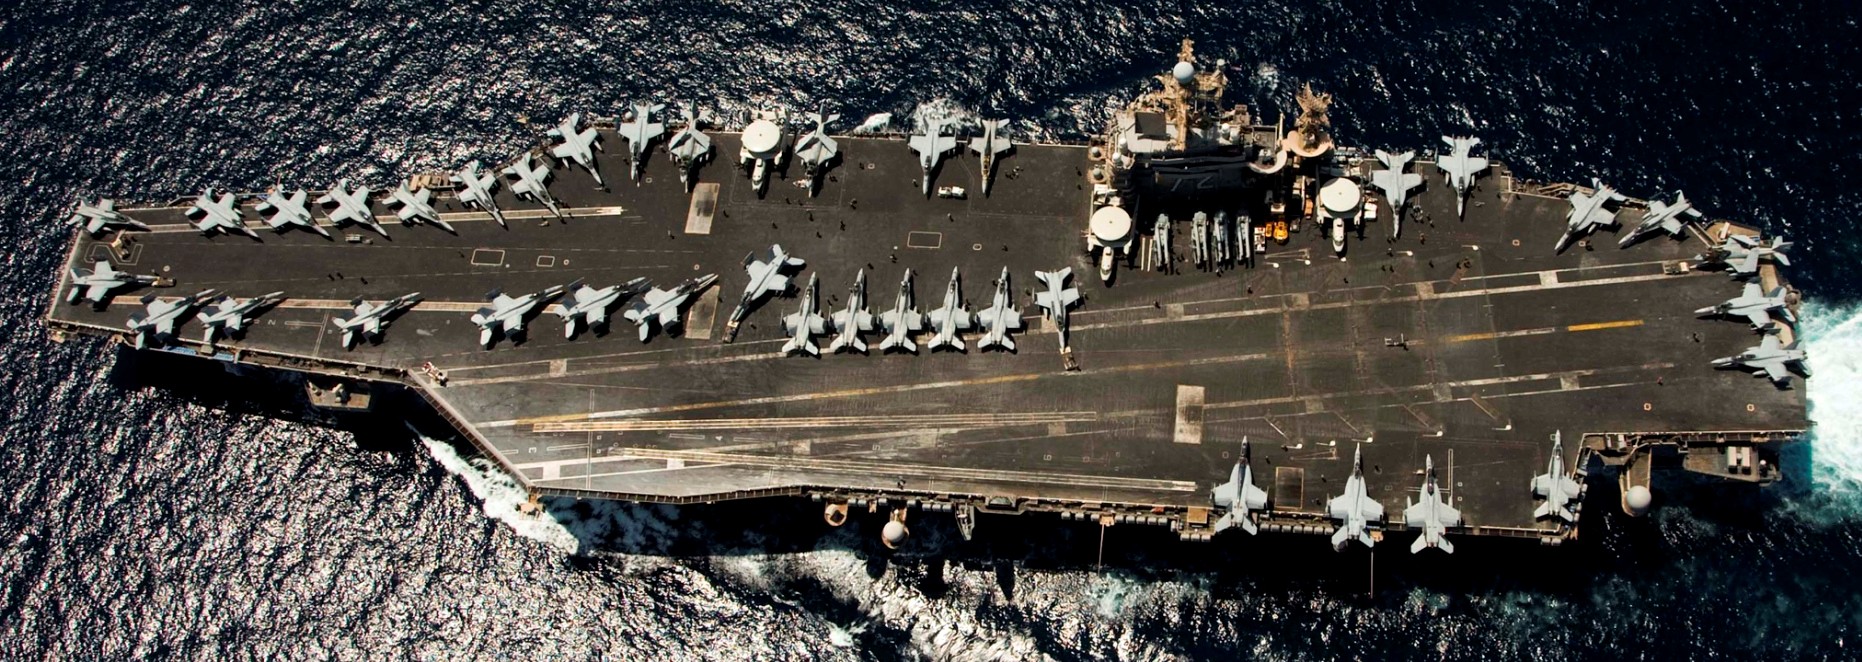 cvn-72 uss abraham lincoln nimitz class aircraft carrier air wing cvw-2 us navy arabian sea p23